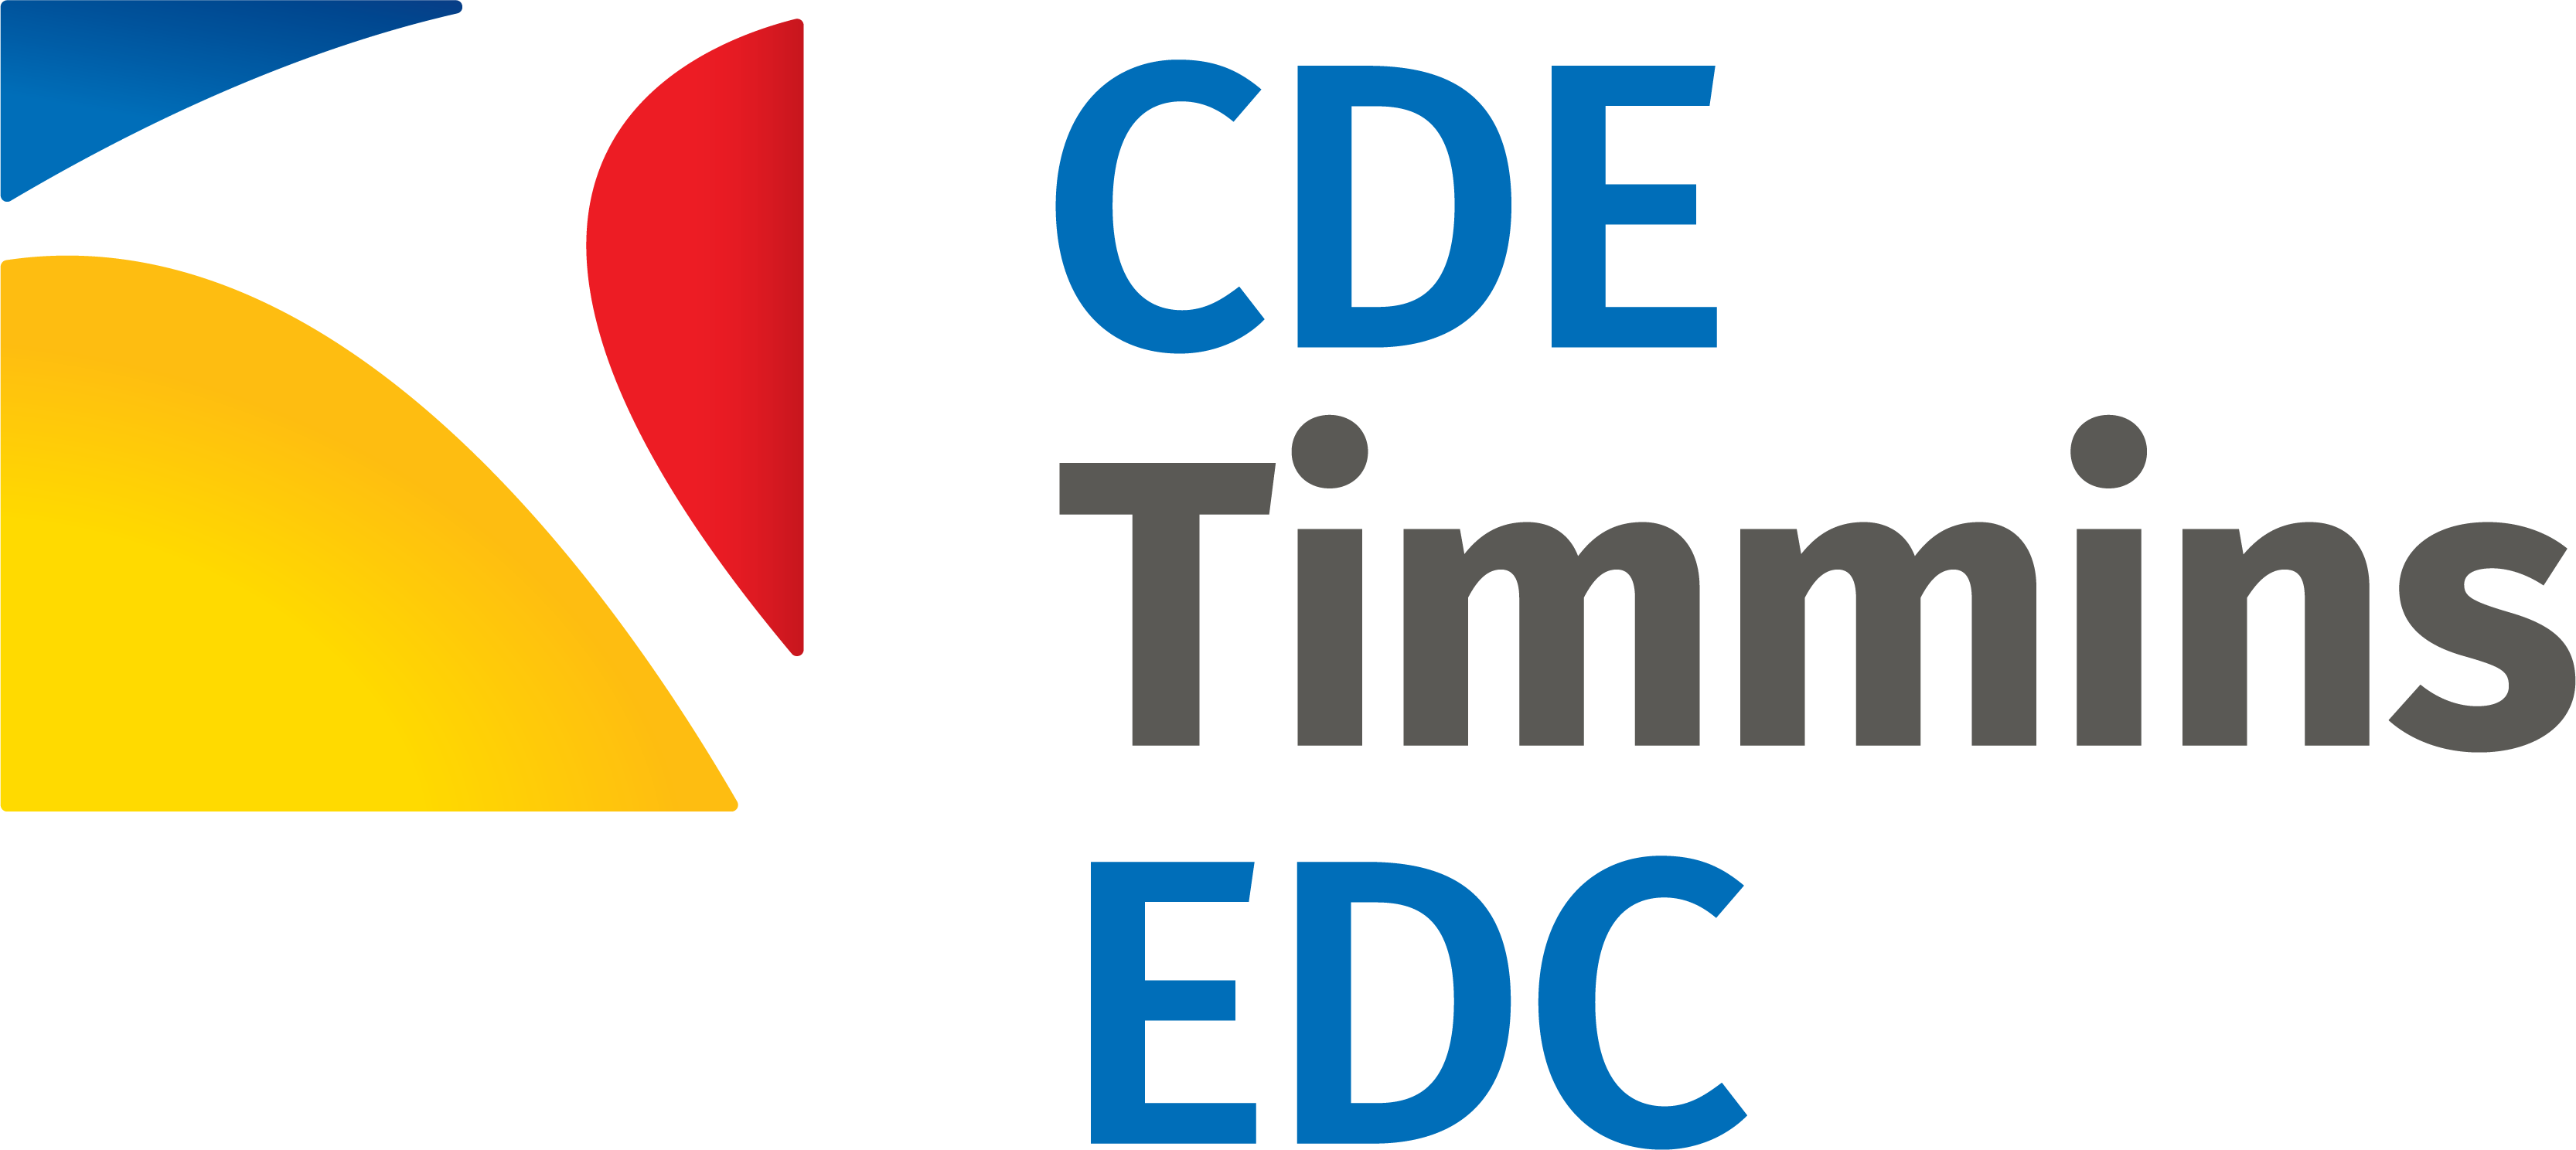 Timmins Economic Development Corporation (TEDC)